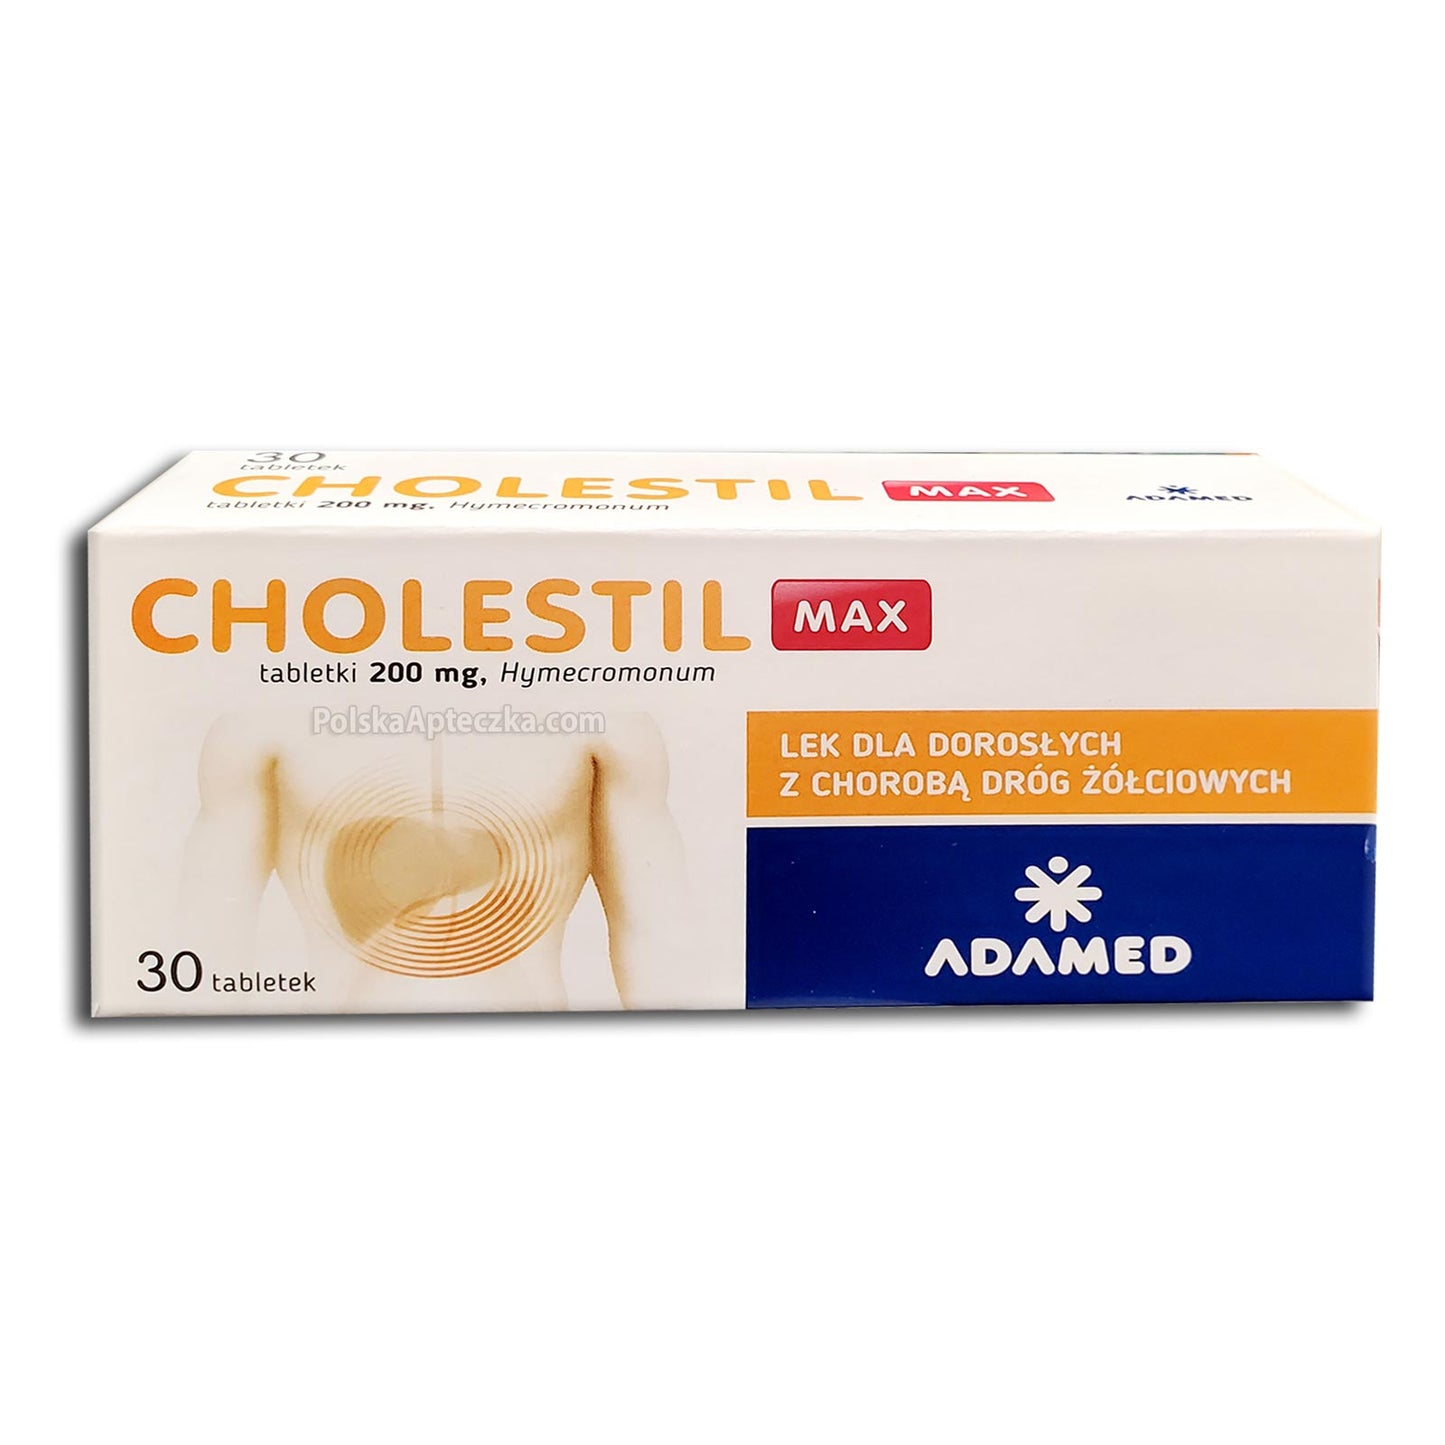 Cholestil Max tablets